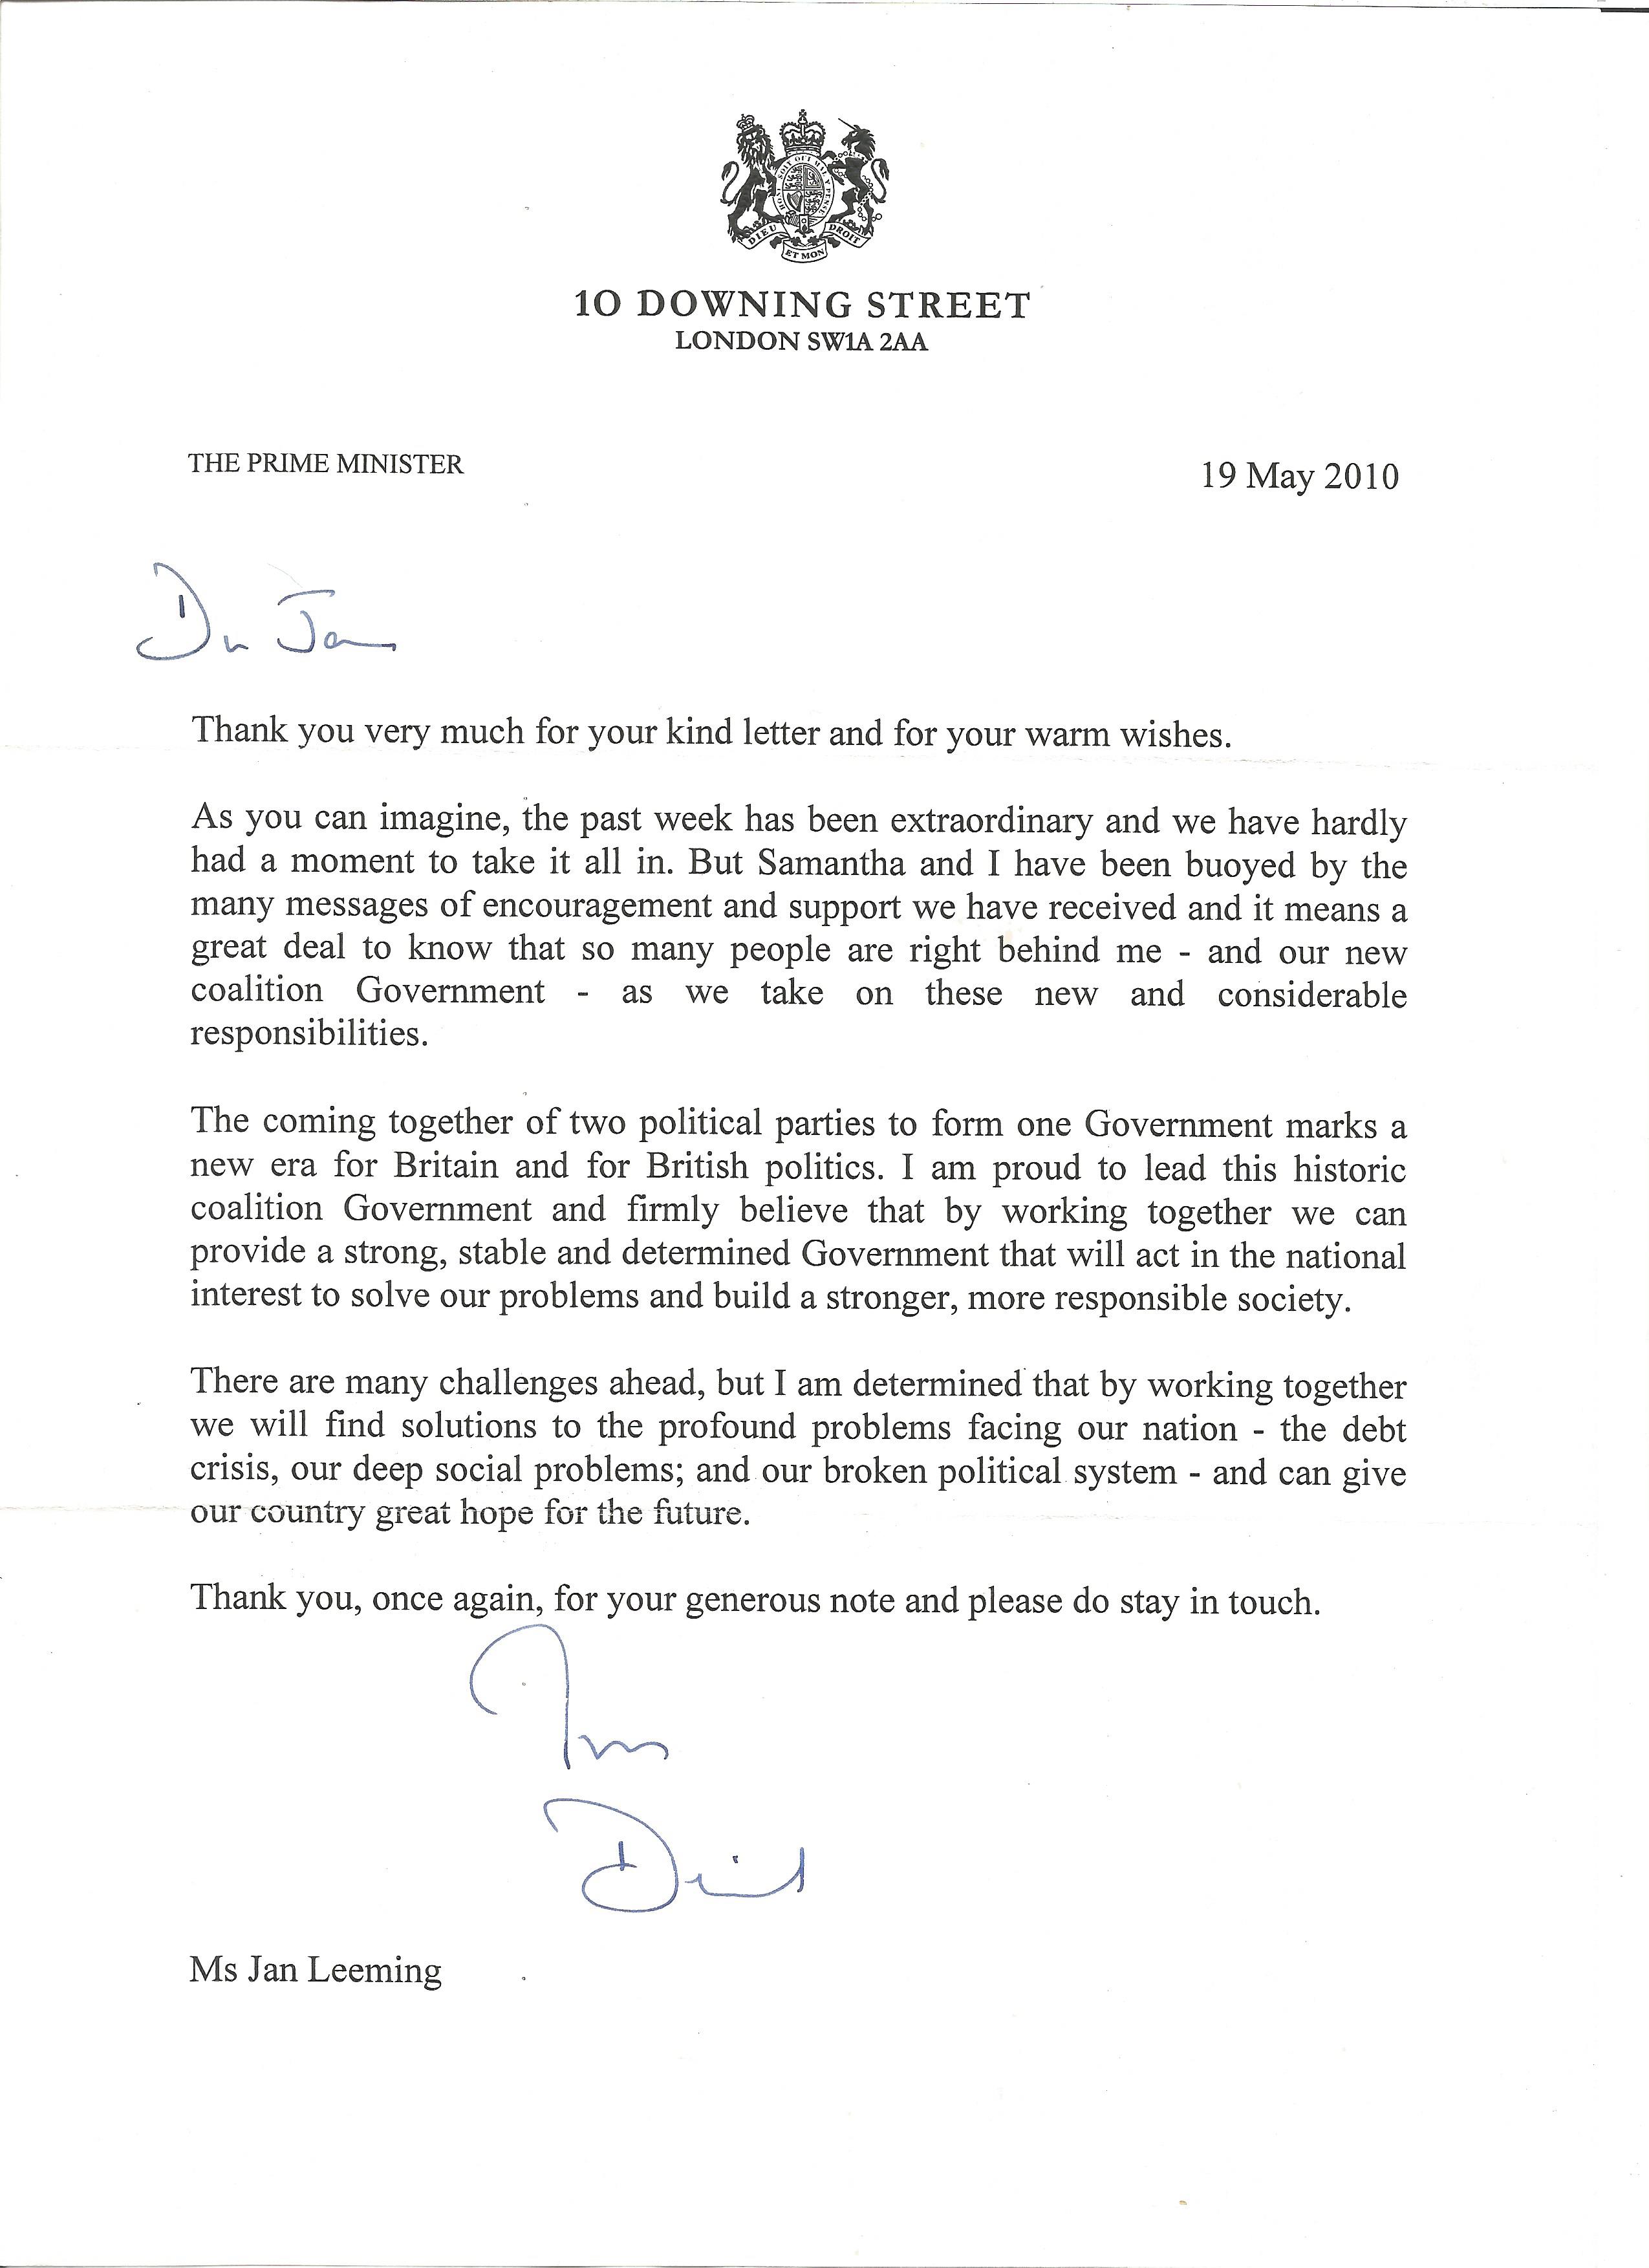 David Cameron signed TLS dated 19 May 2010 addressed to TV presenter and newsreader Jan Leeming